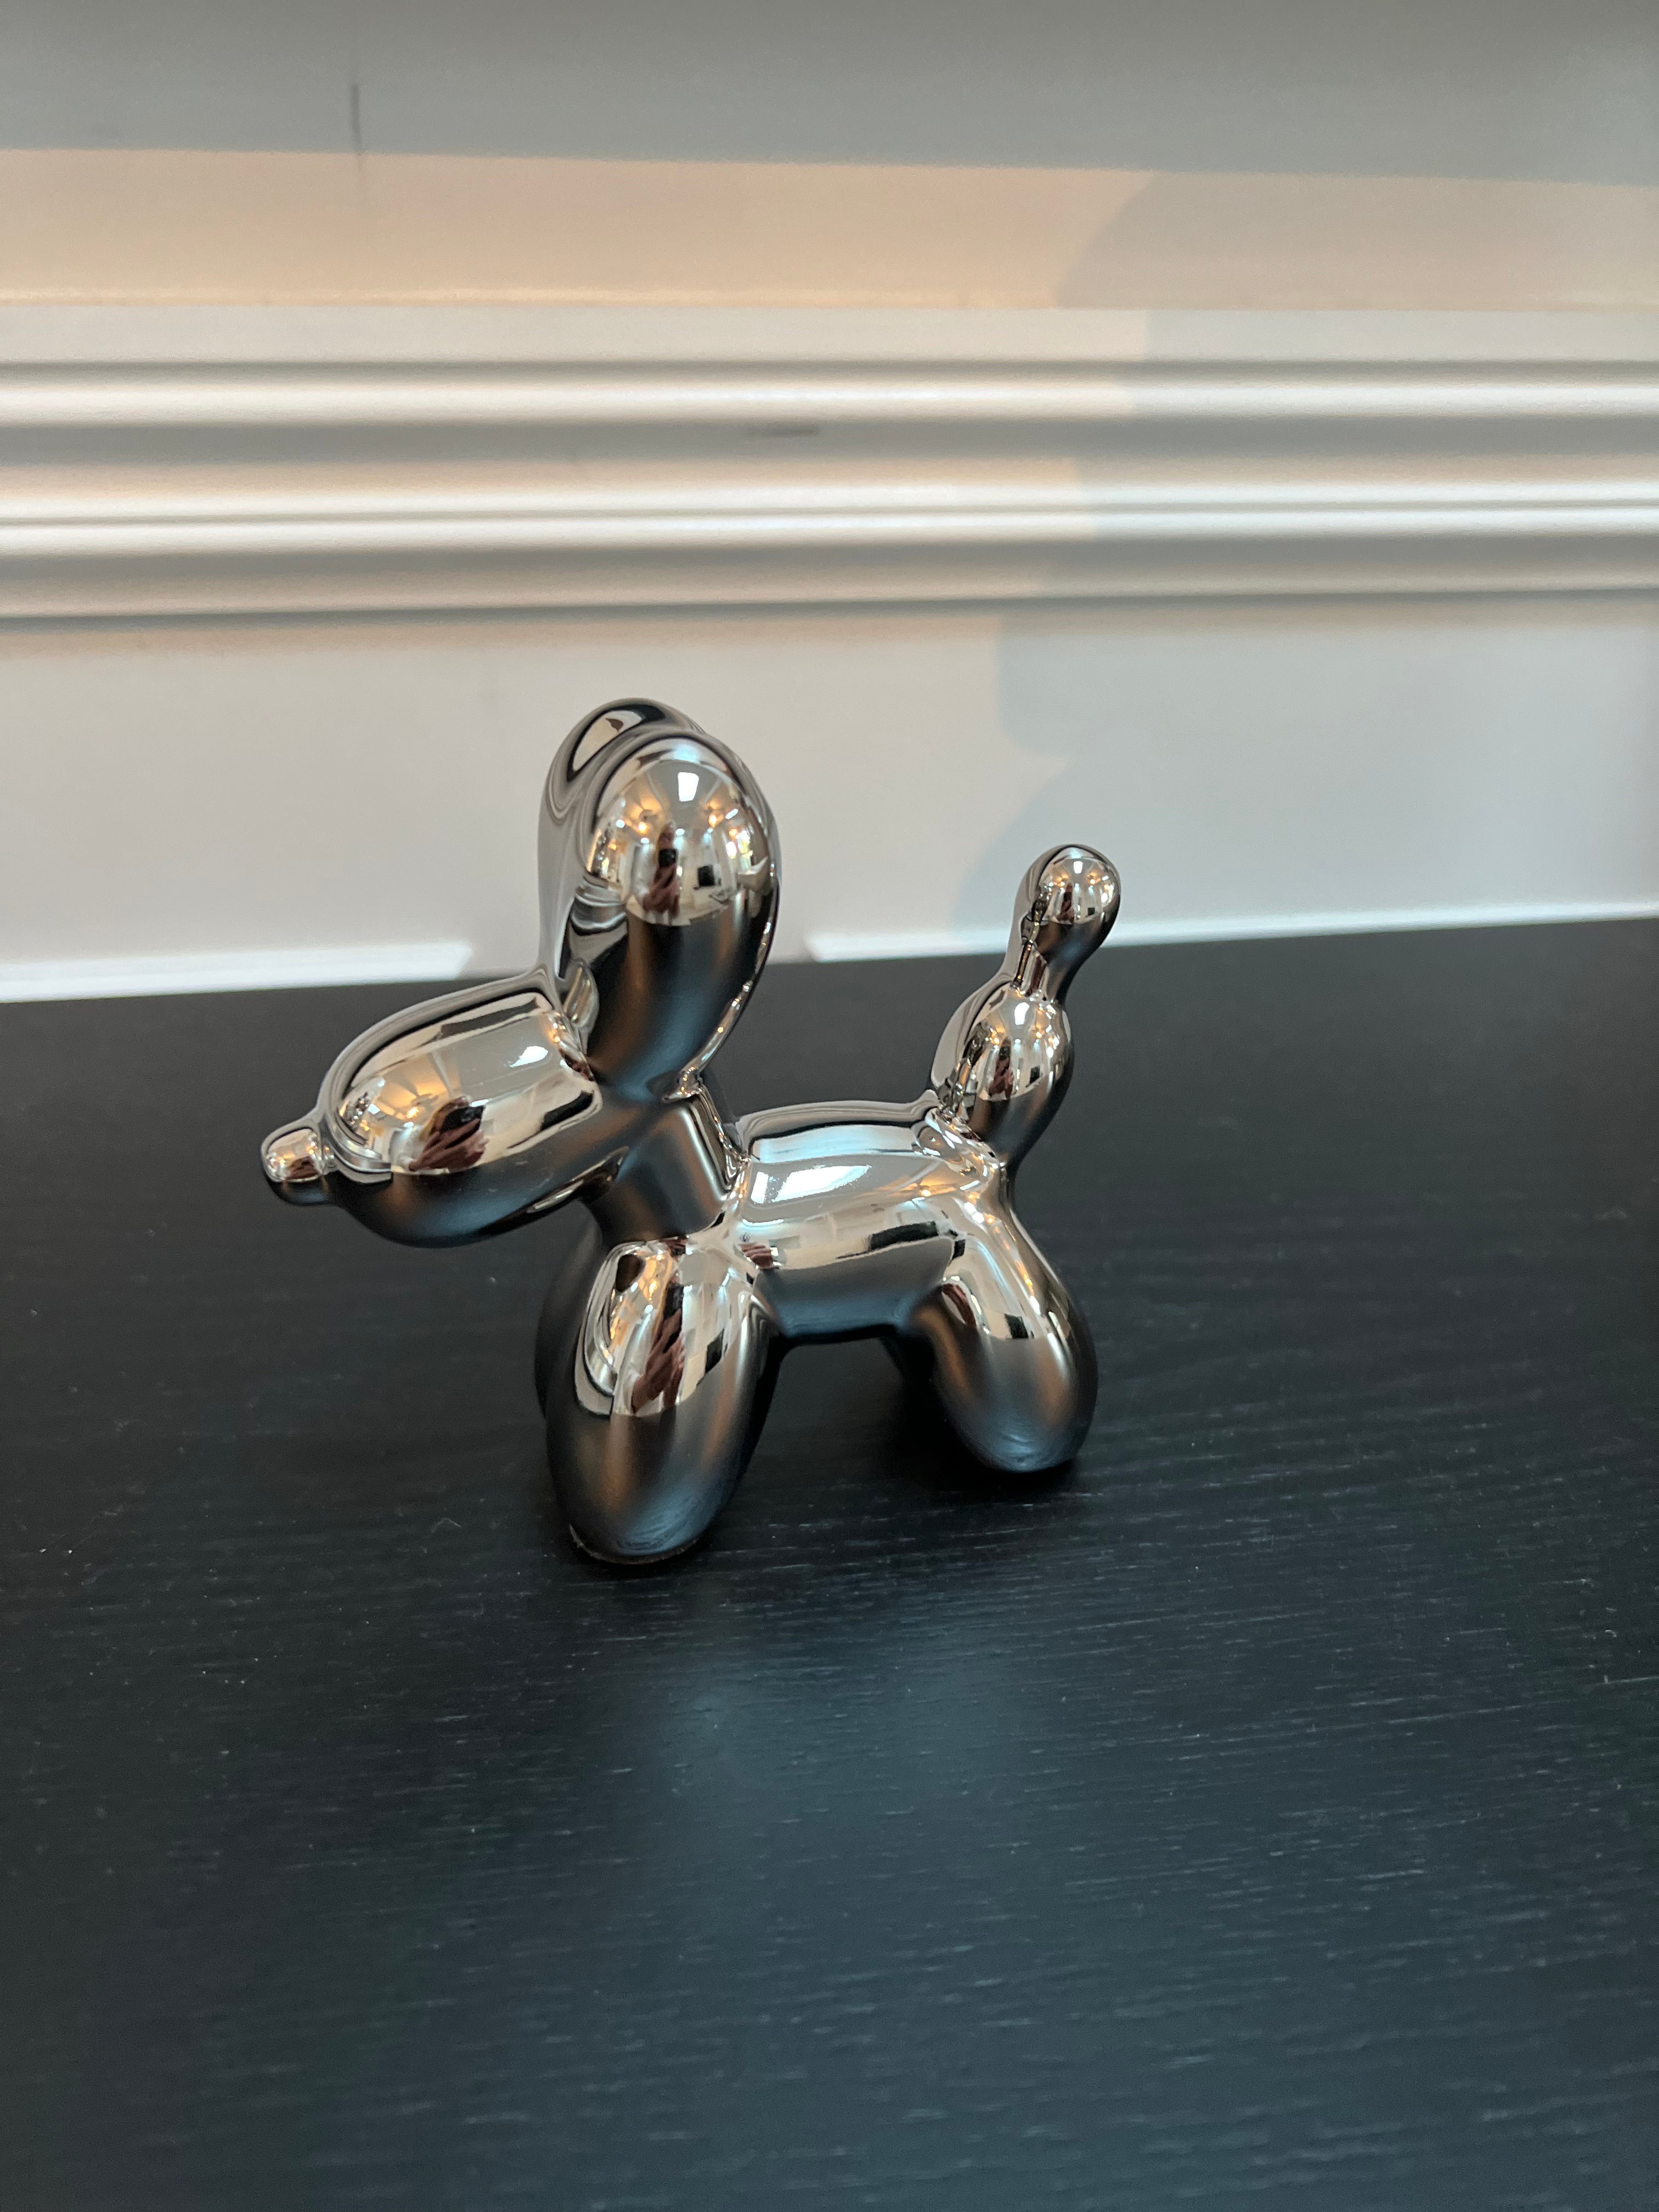 Silver Balloon Dog Figurine Small